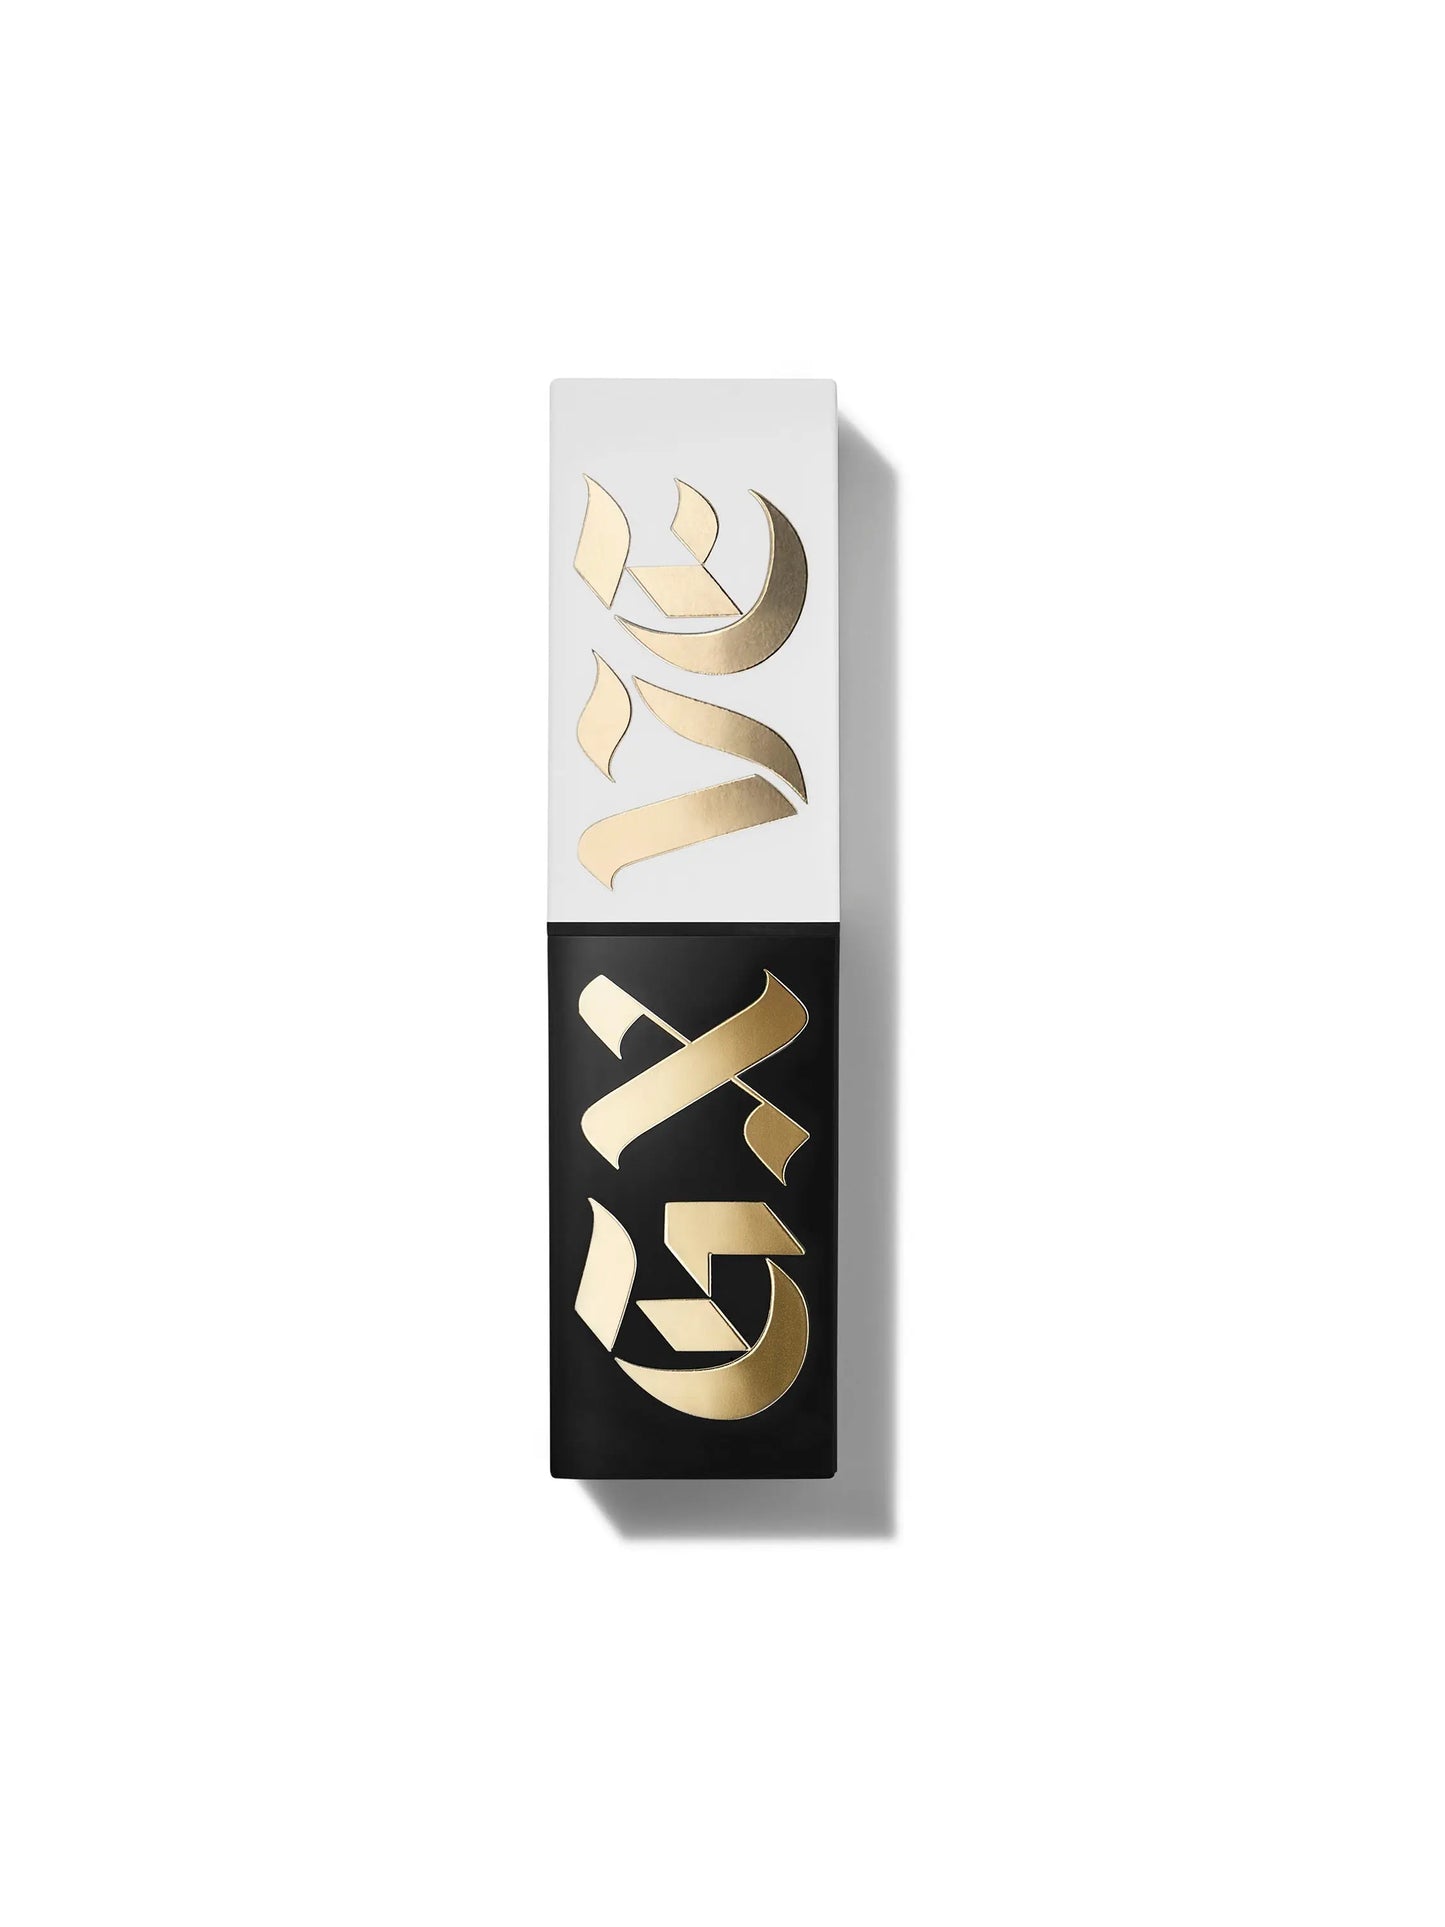 GXVE Loara - High-Performance Satin Lipstick